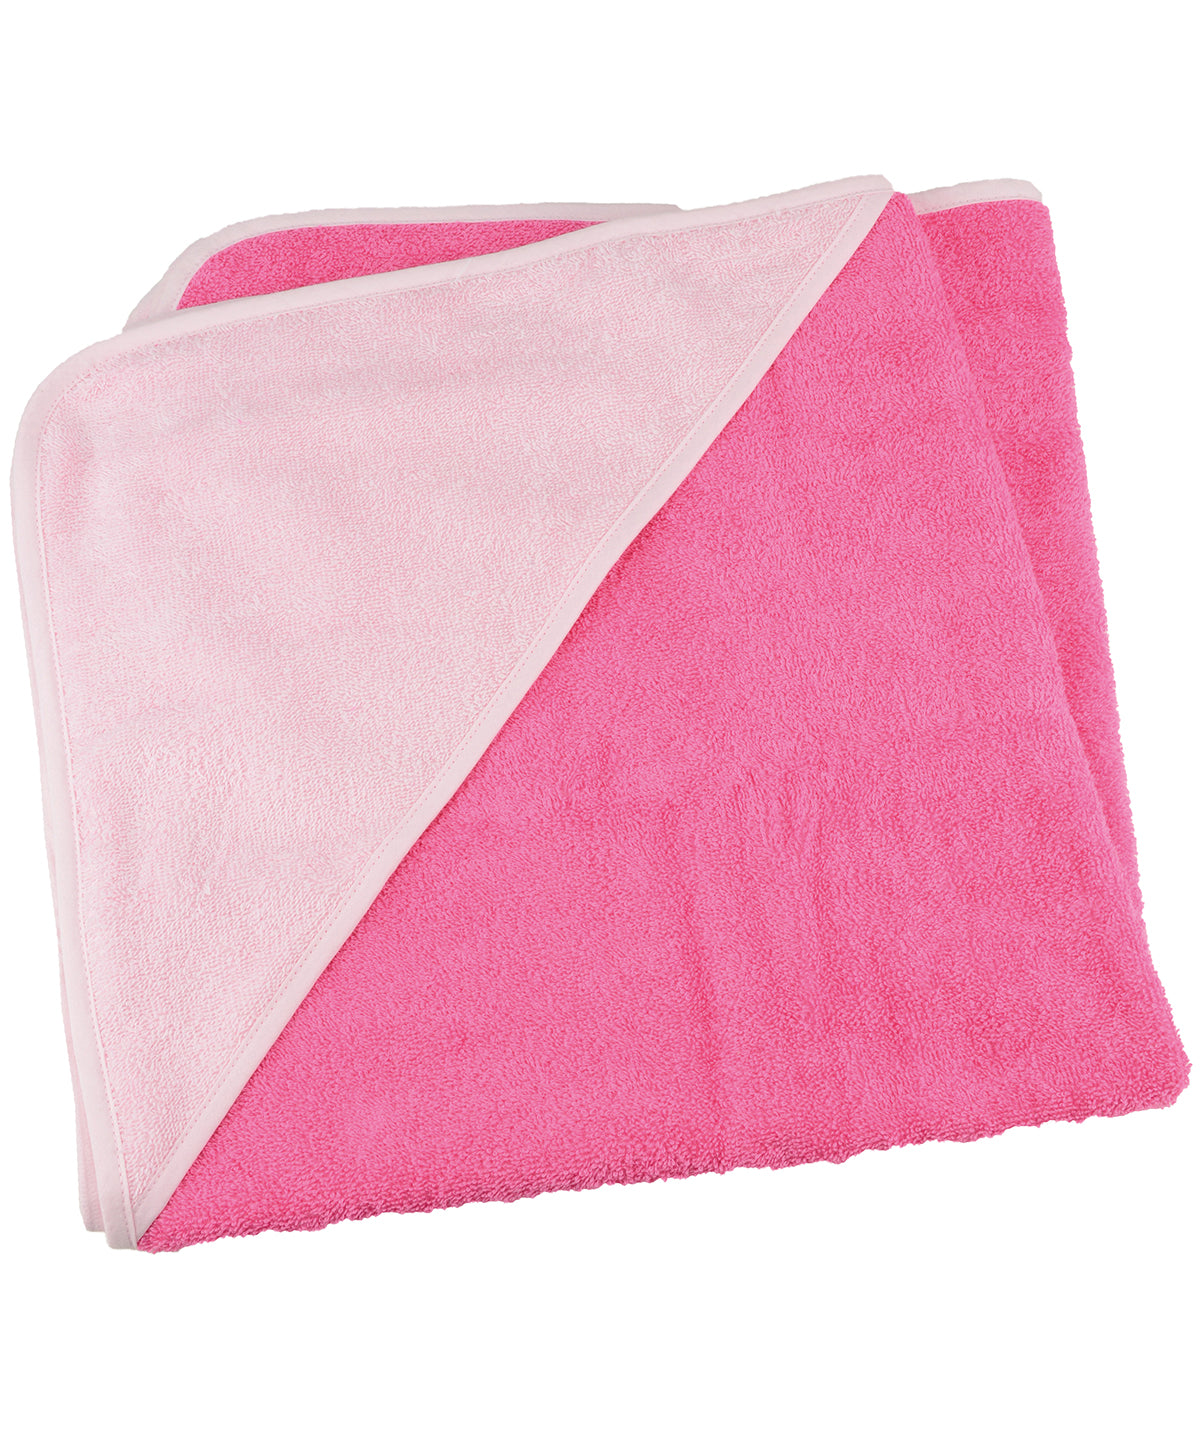 Personalised Towels - Mid Pink A&R Towels ARTG® Babiezz® medium baby hooded towel